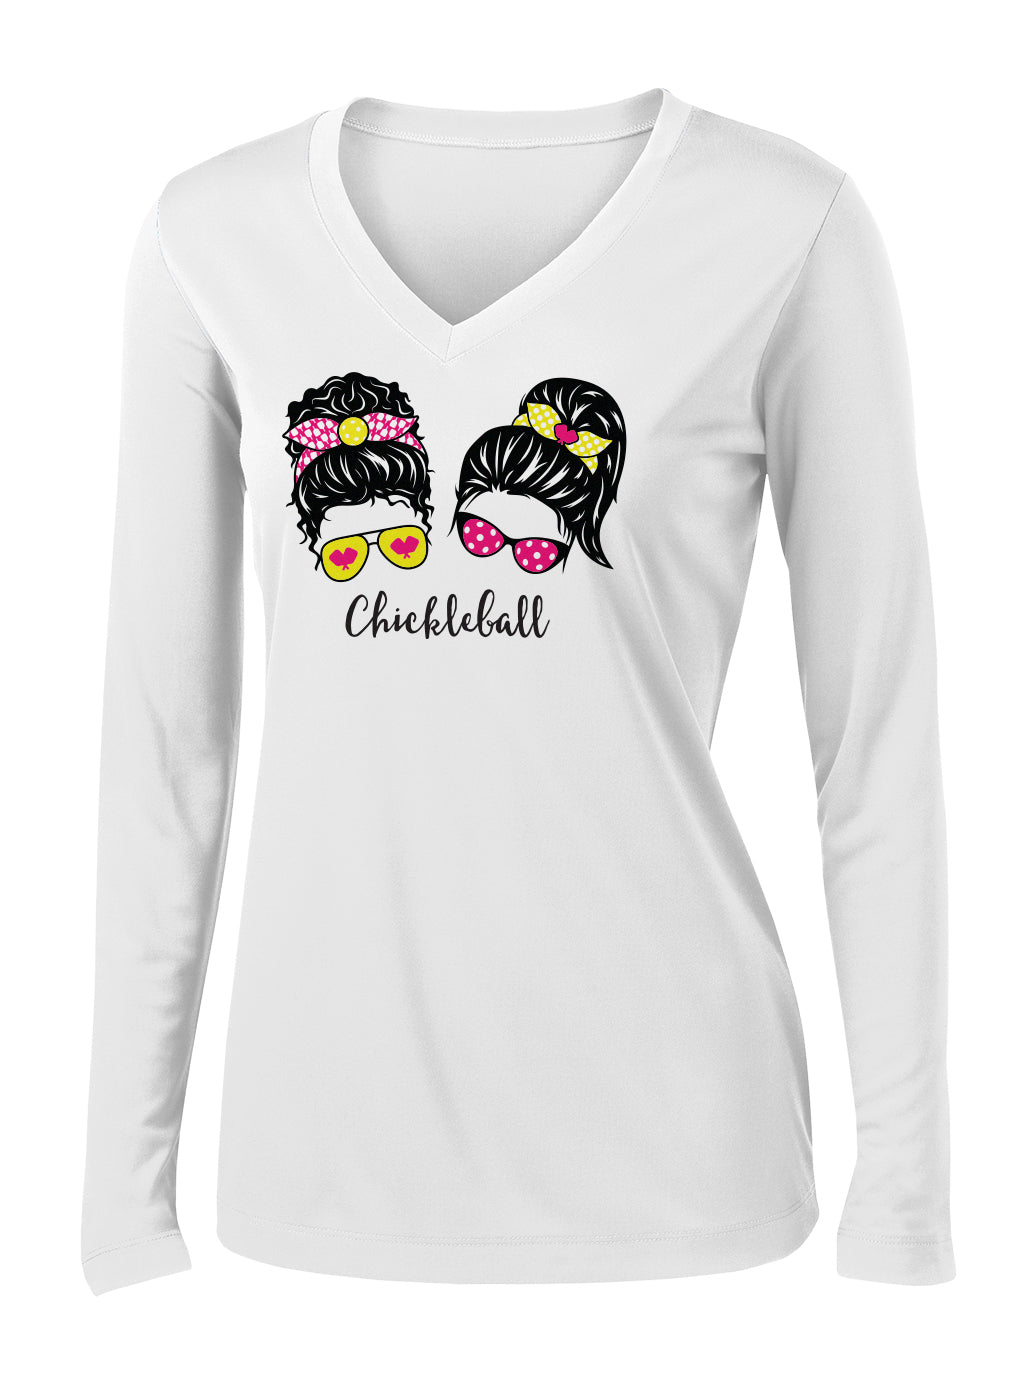 Chickleball™ Doubles - Women's Pickleball Performance Long Sleeve Shirt